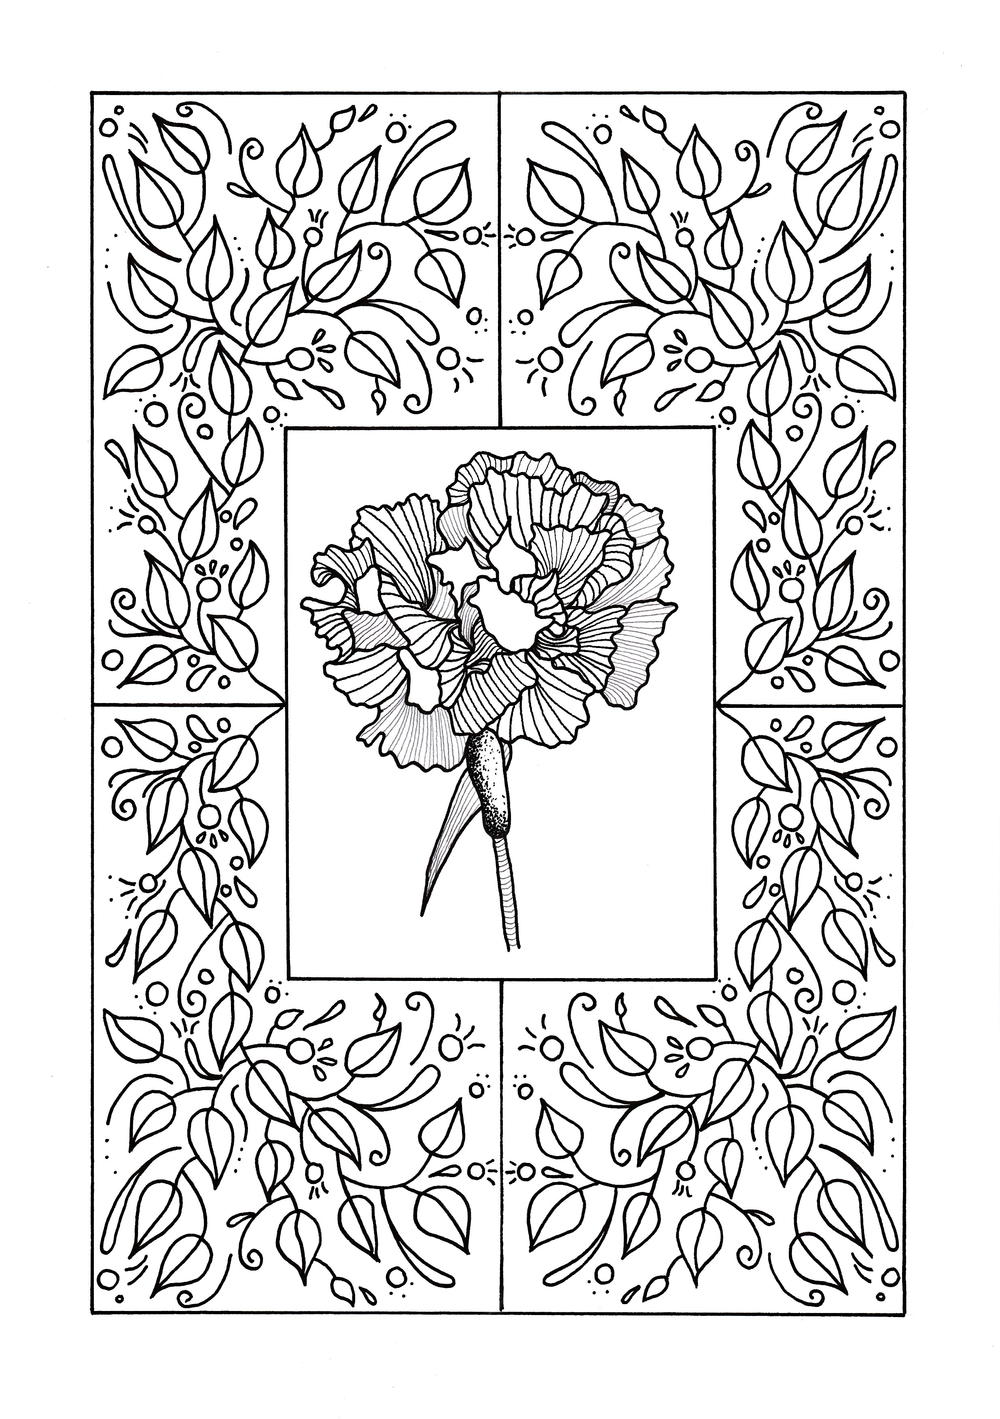 Carnation Mandala Adult Coloring Page   FaveCrafts.com